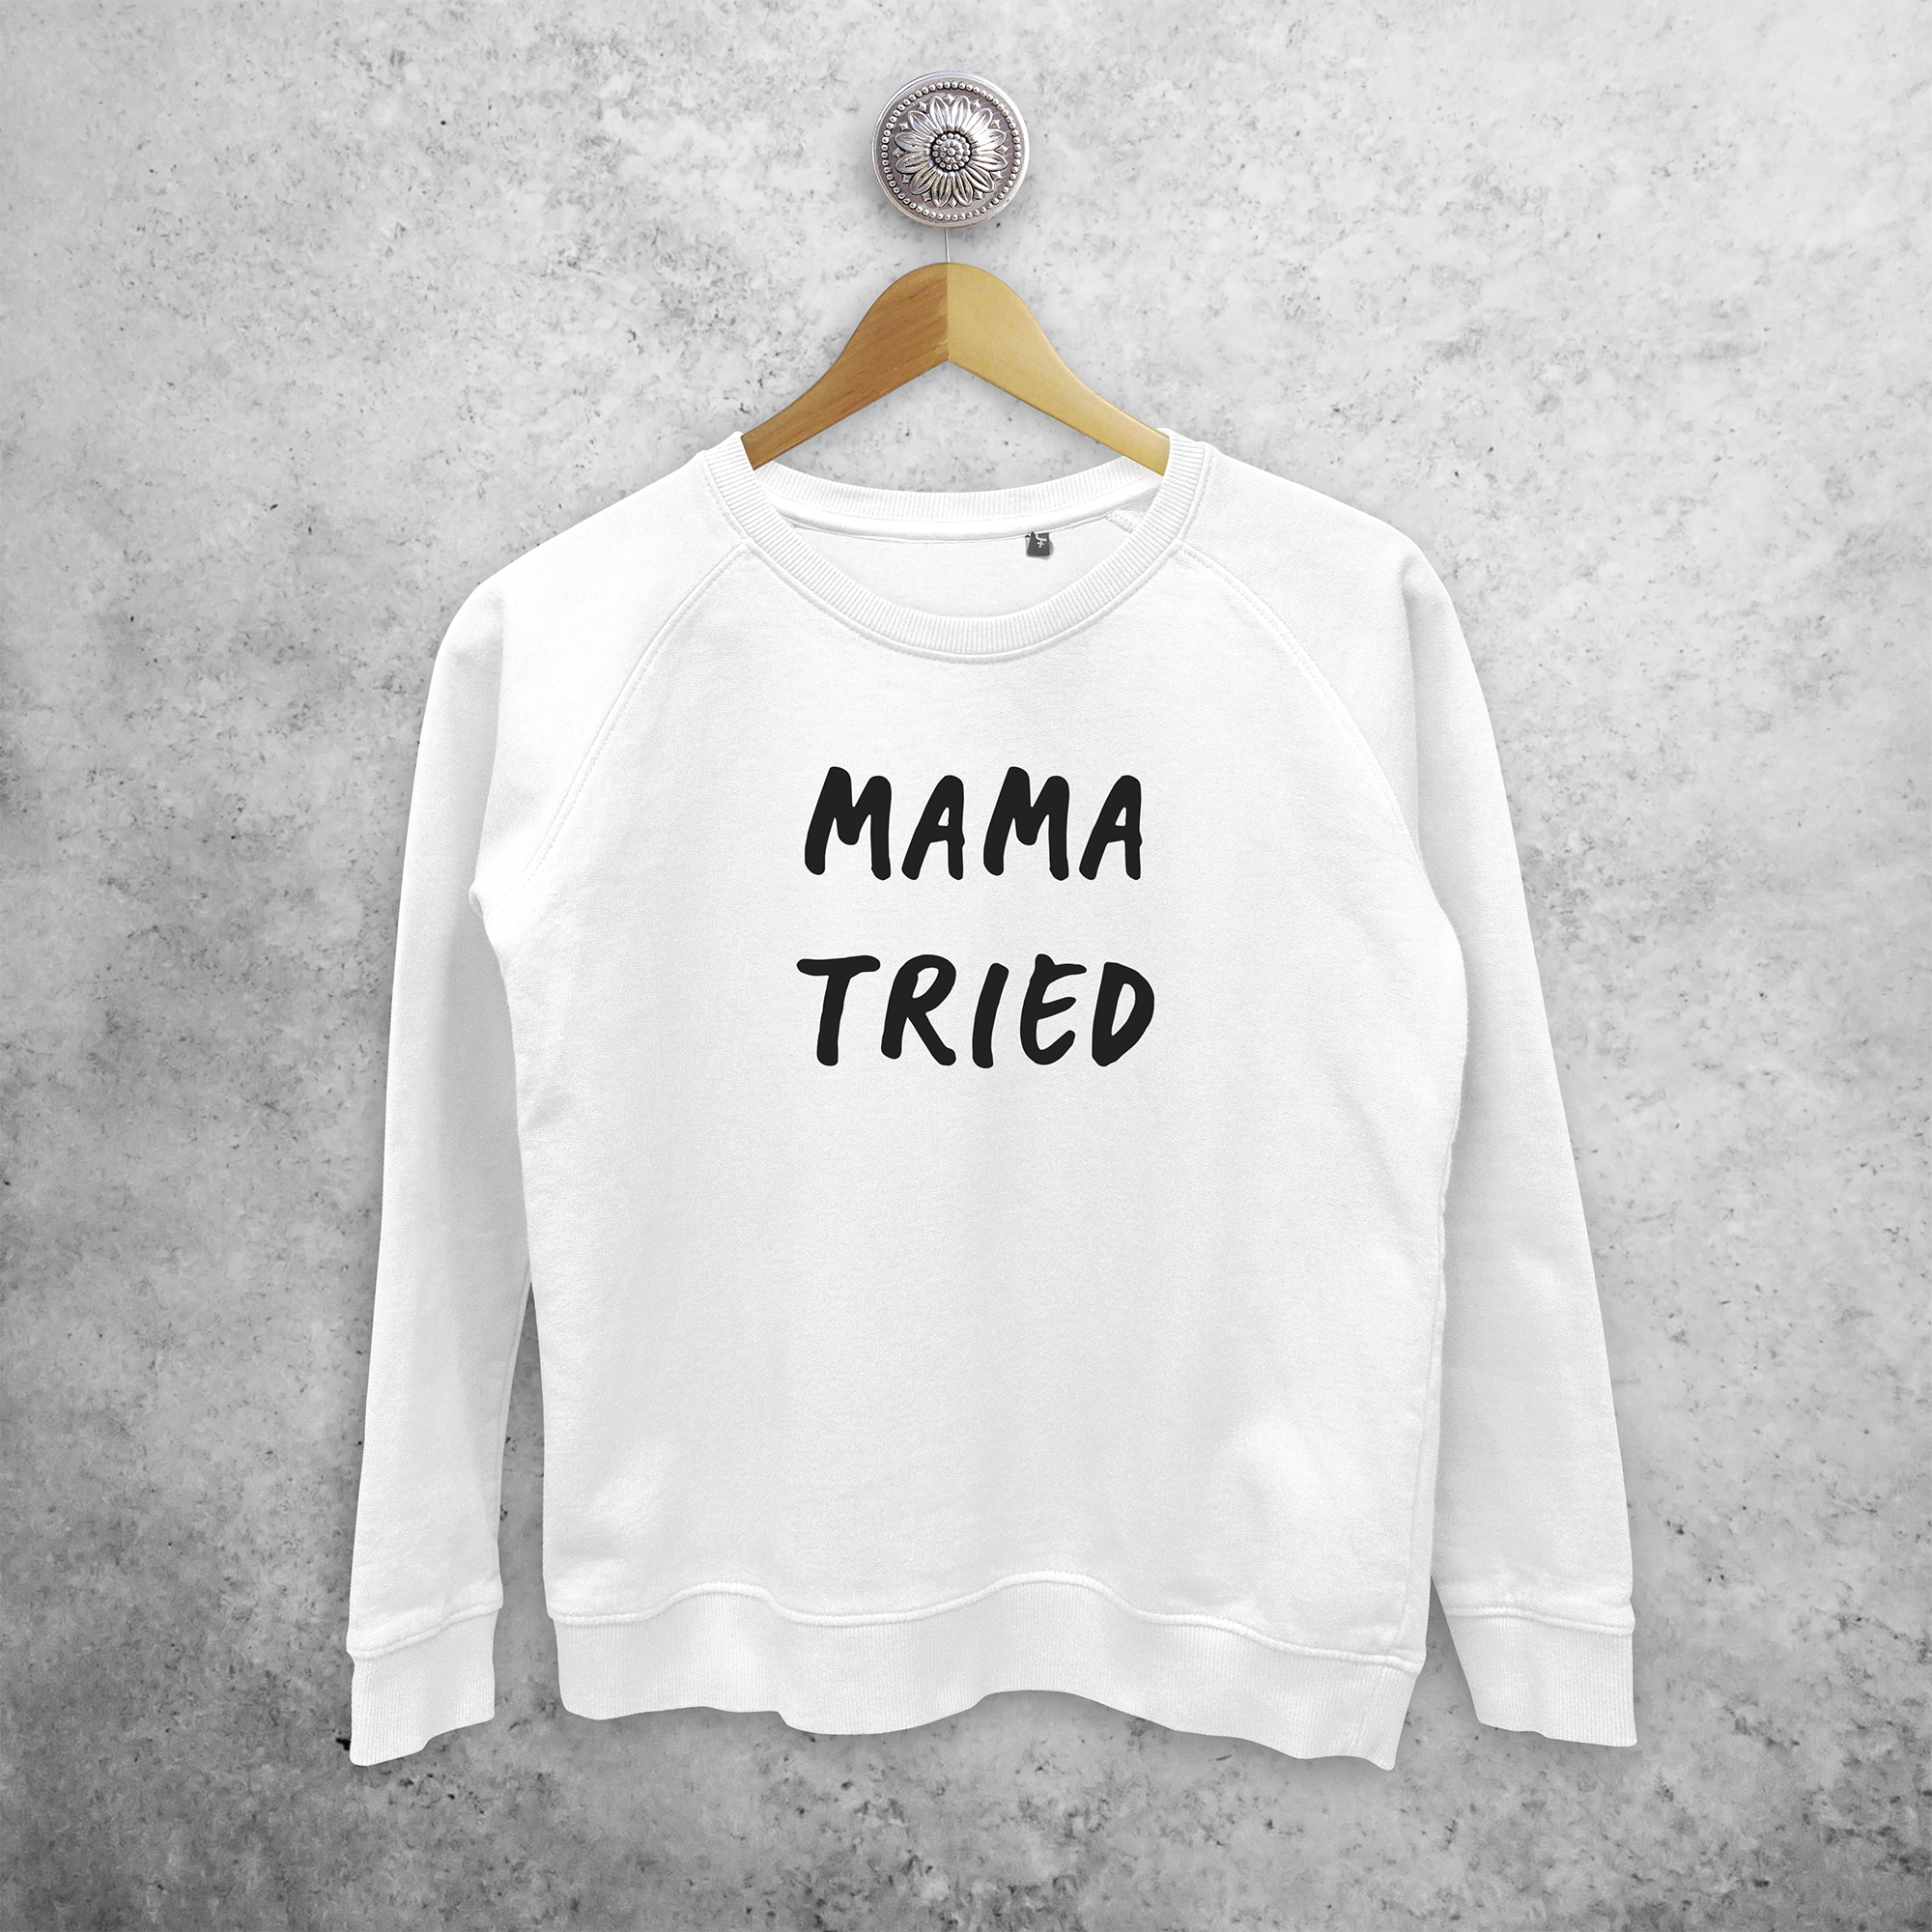 'Mama tried' sweater